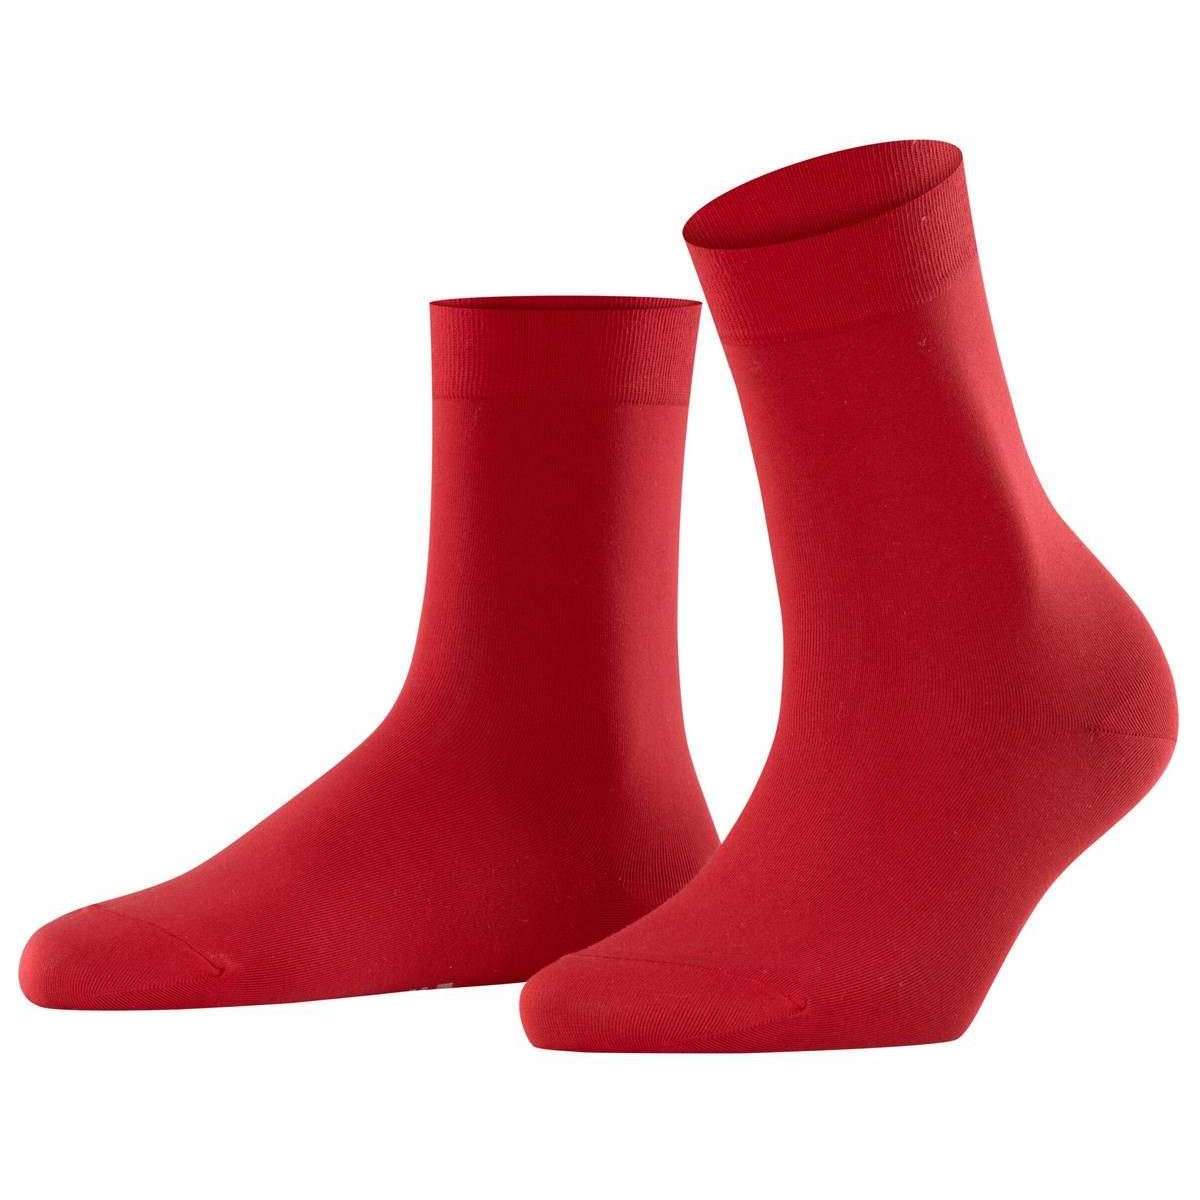 Falke Cotton Touch Socks - Scarlet Red